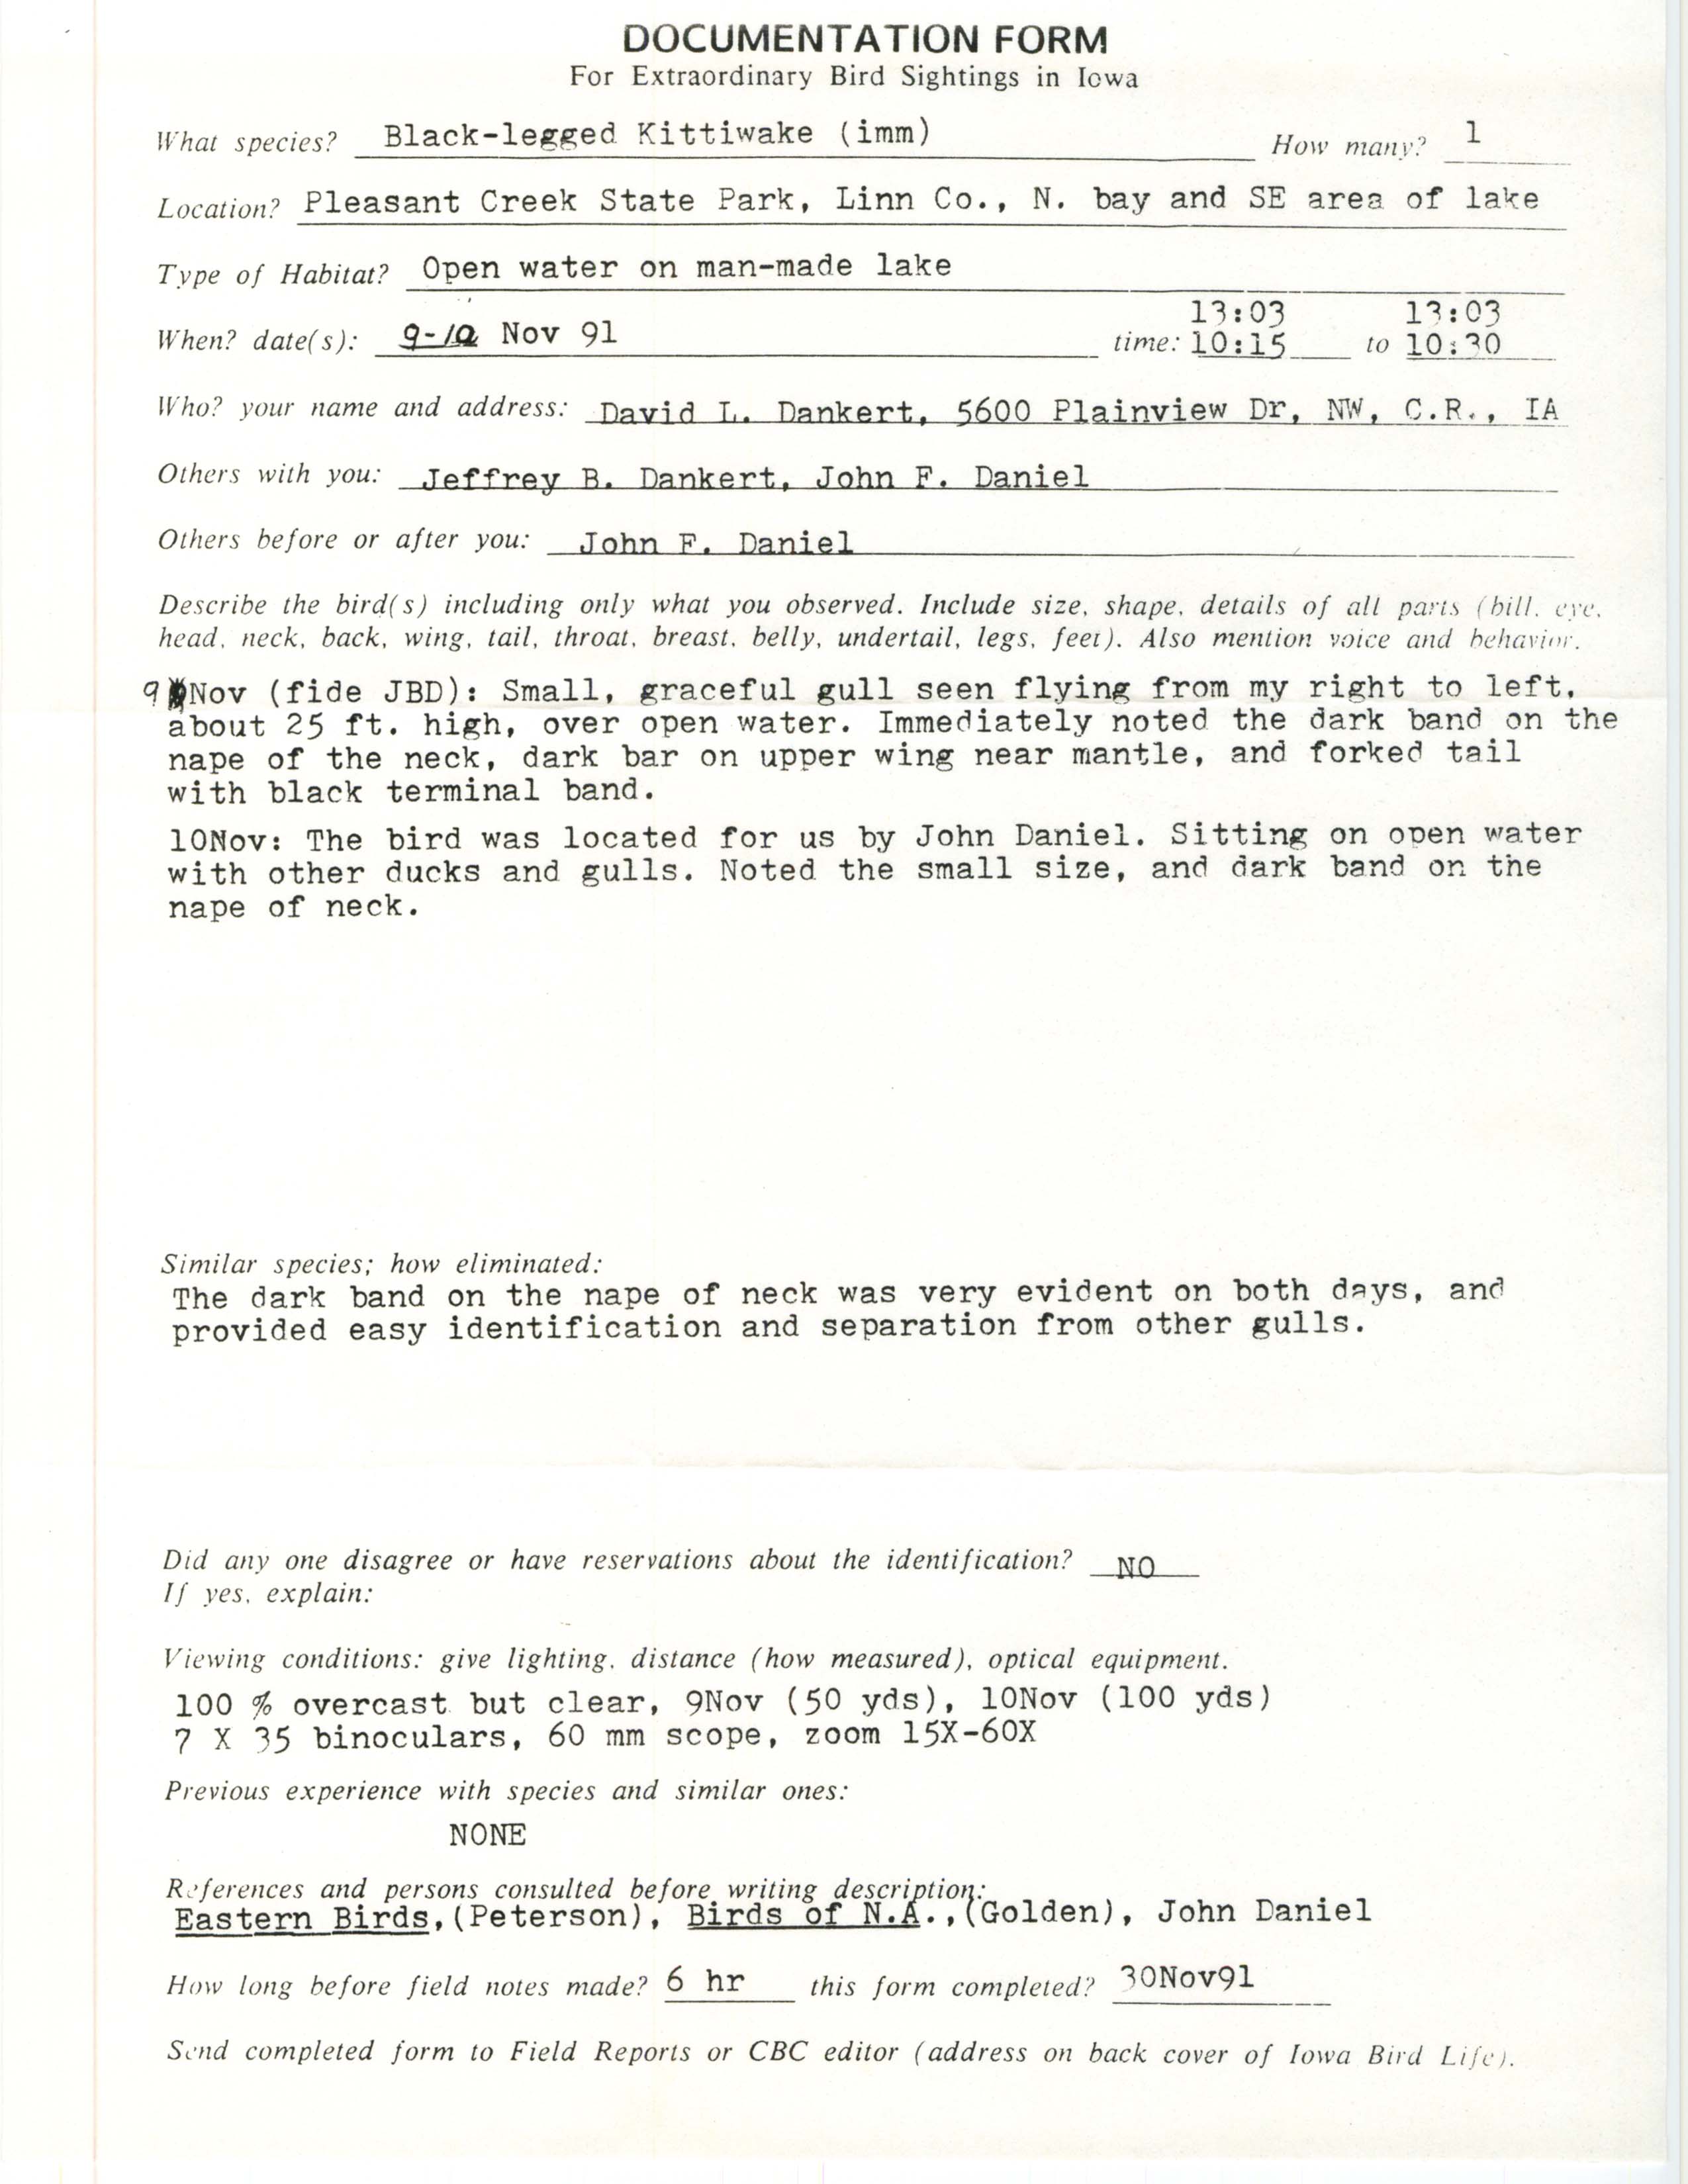 Rare bird documentation form for Black-legged Kittiwake at Pleasant Creek State Park in 1991